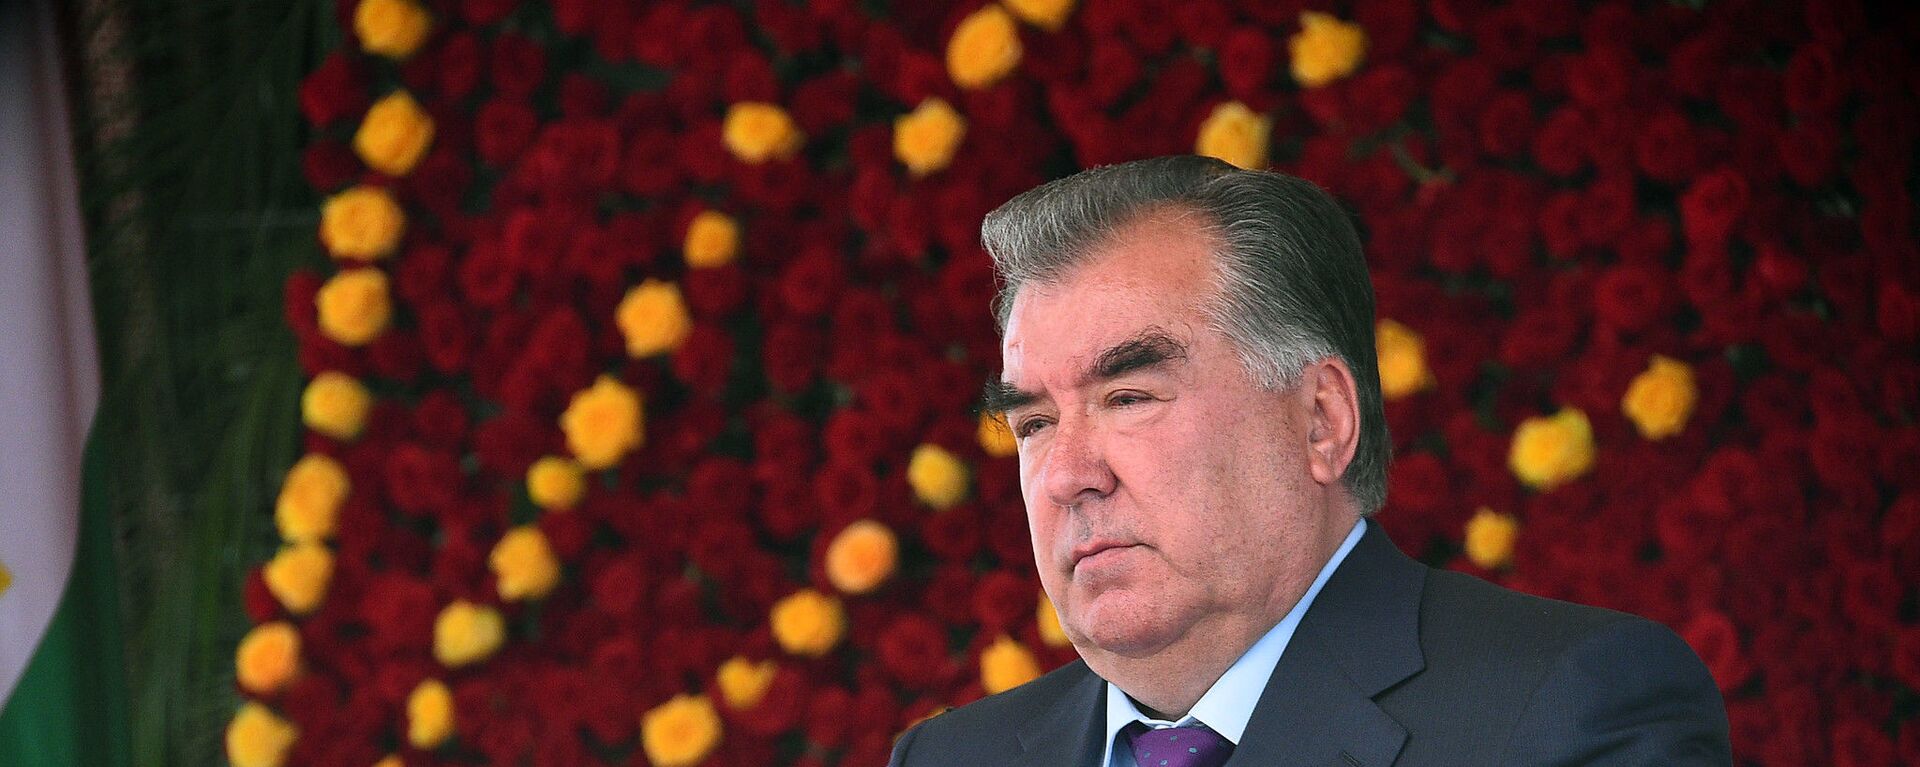 Президент Республики Таджикистана Эмомали Рахмон - Sputnik Тоҷикистон, 1920, 23.08.2019